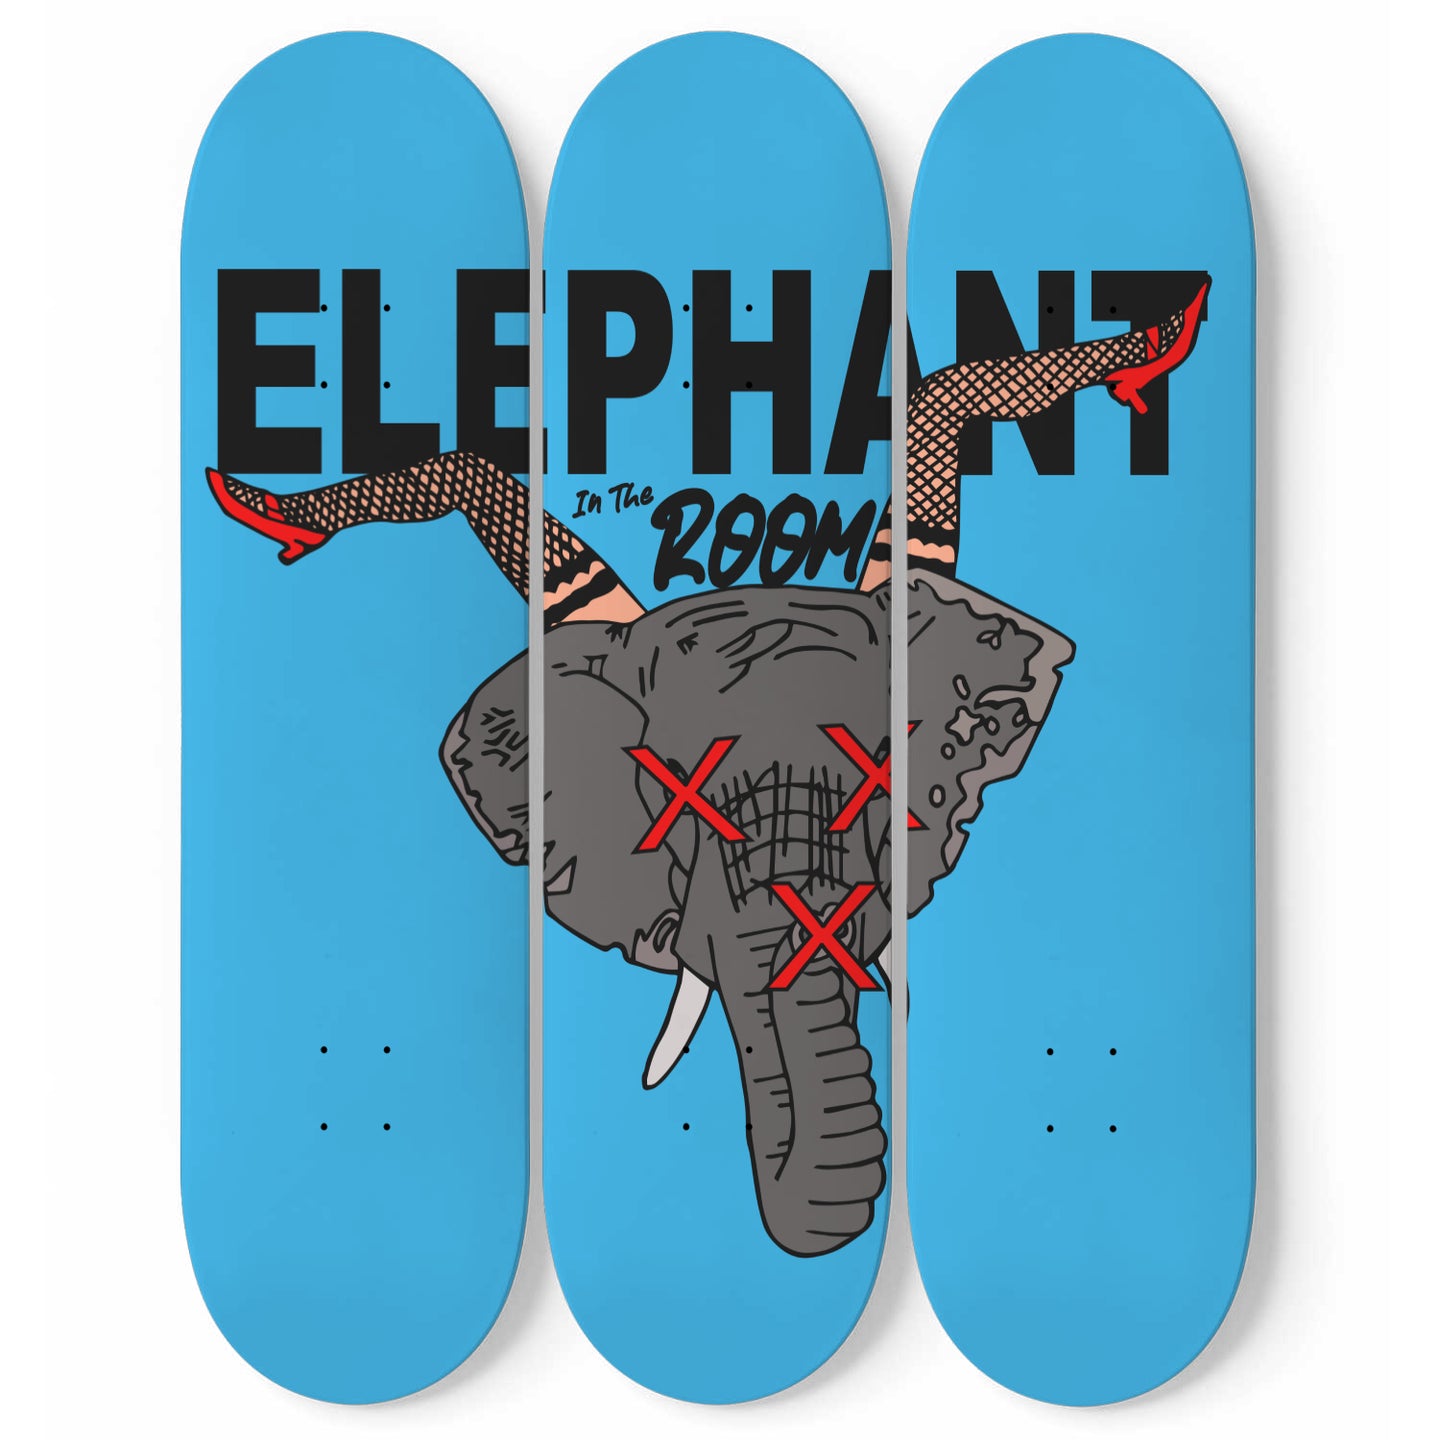 ELEPHANT IN THE ROOM LEGS UP SKATEBOARD WALL ART